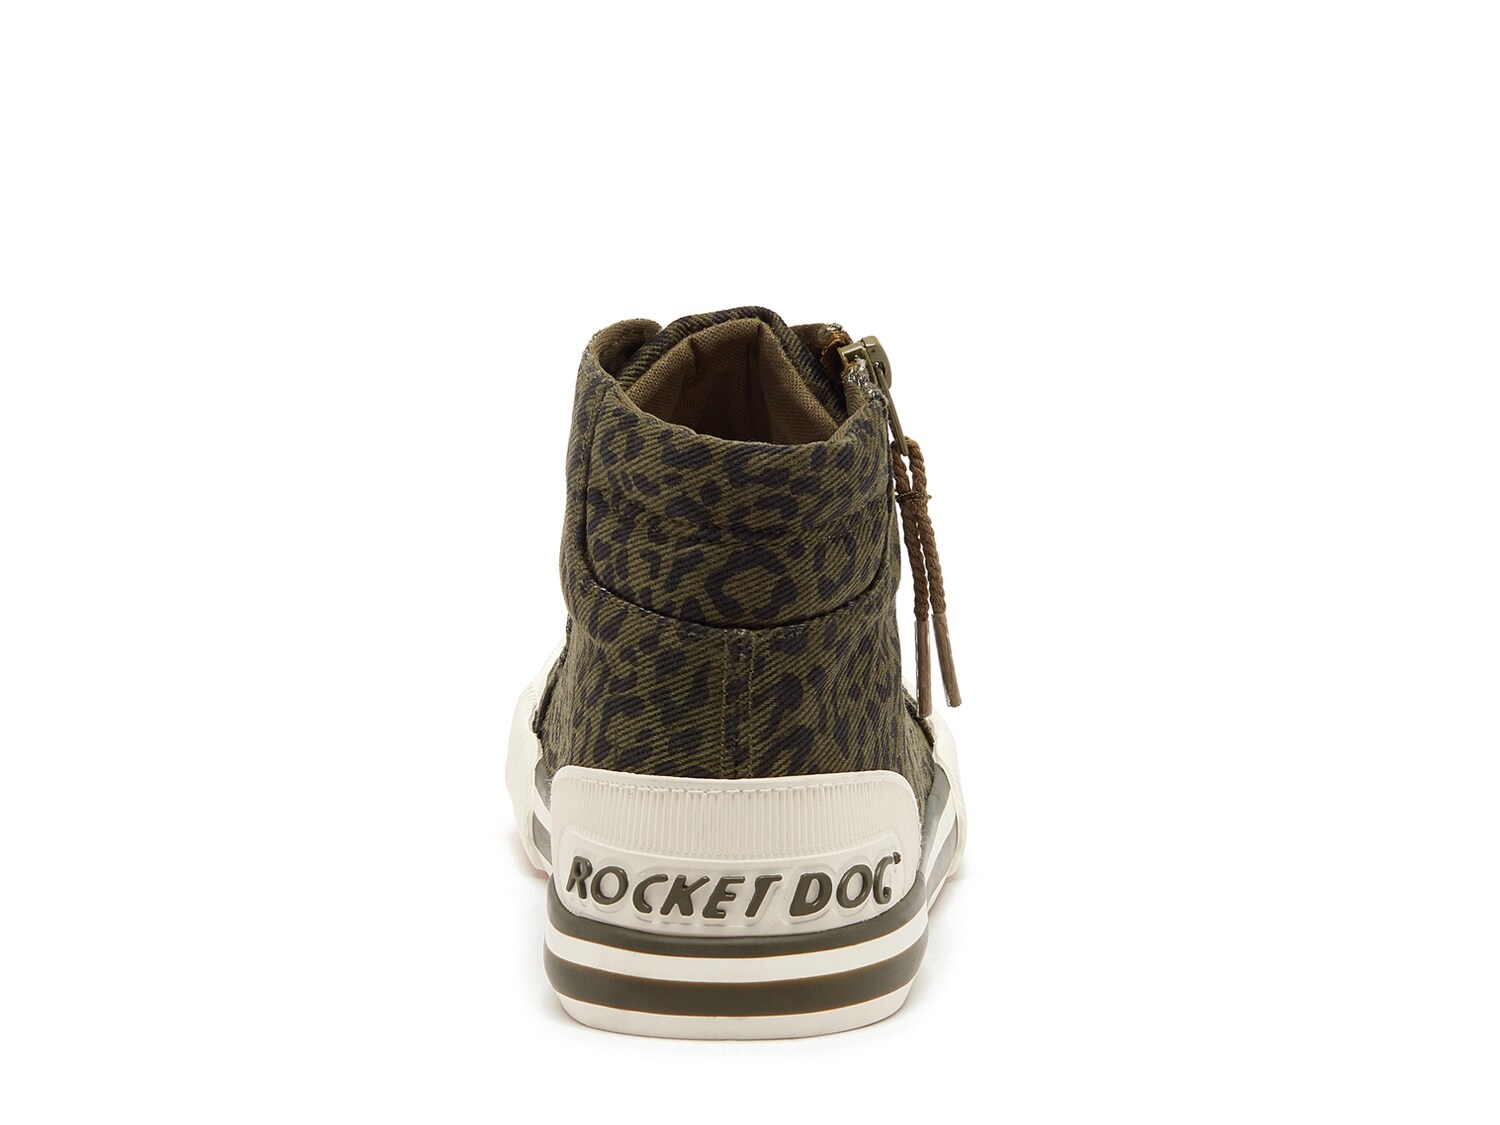 rocket dog high top sneakers